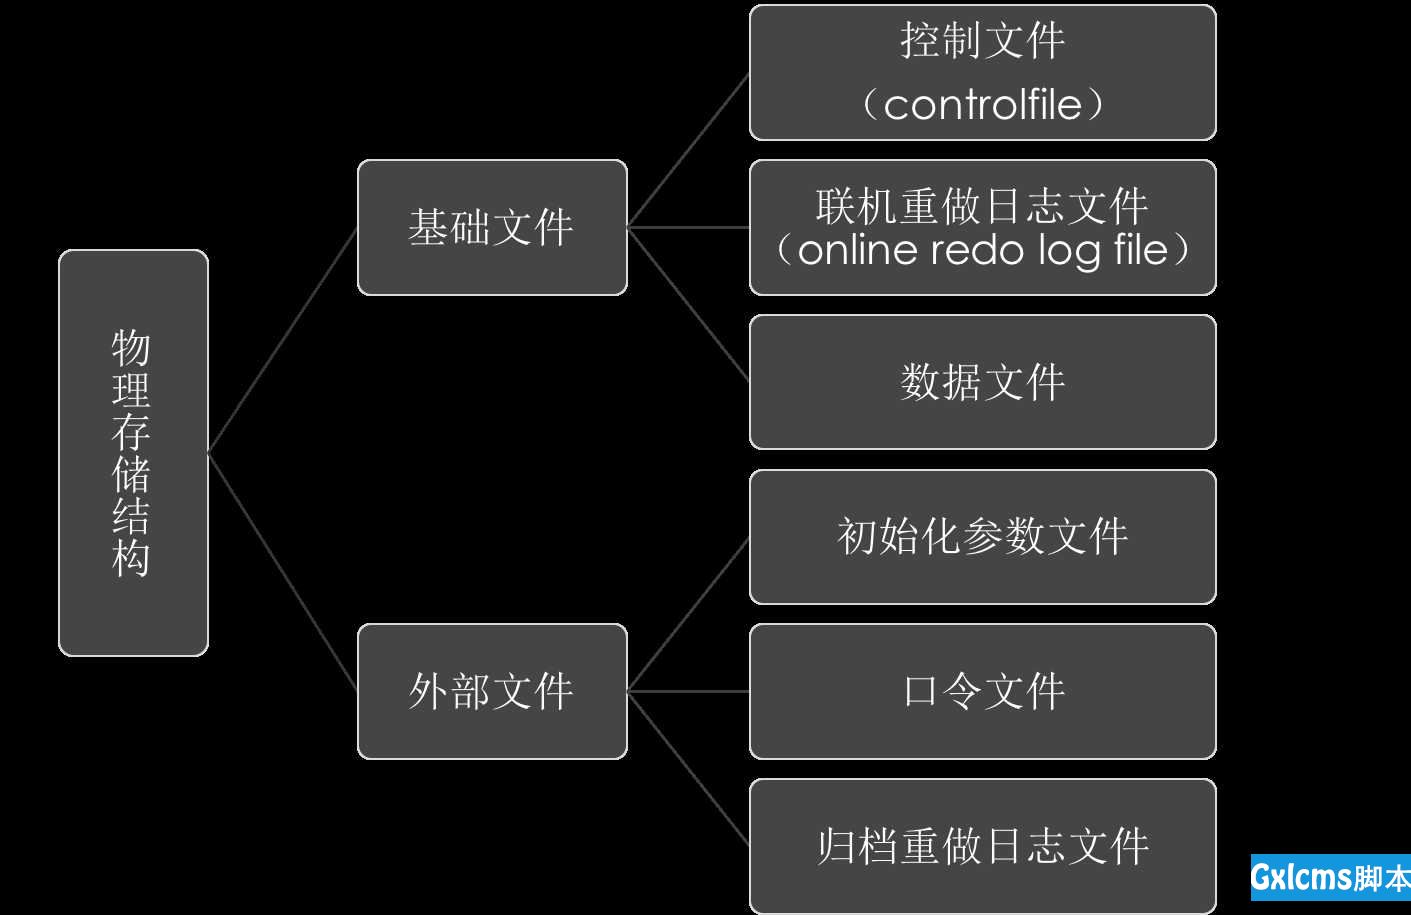 Oracle体系结构详解 - 文章图片